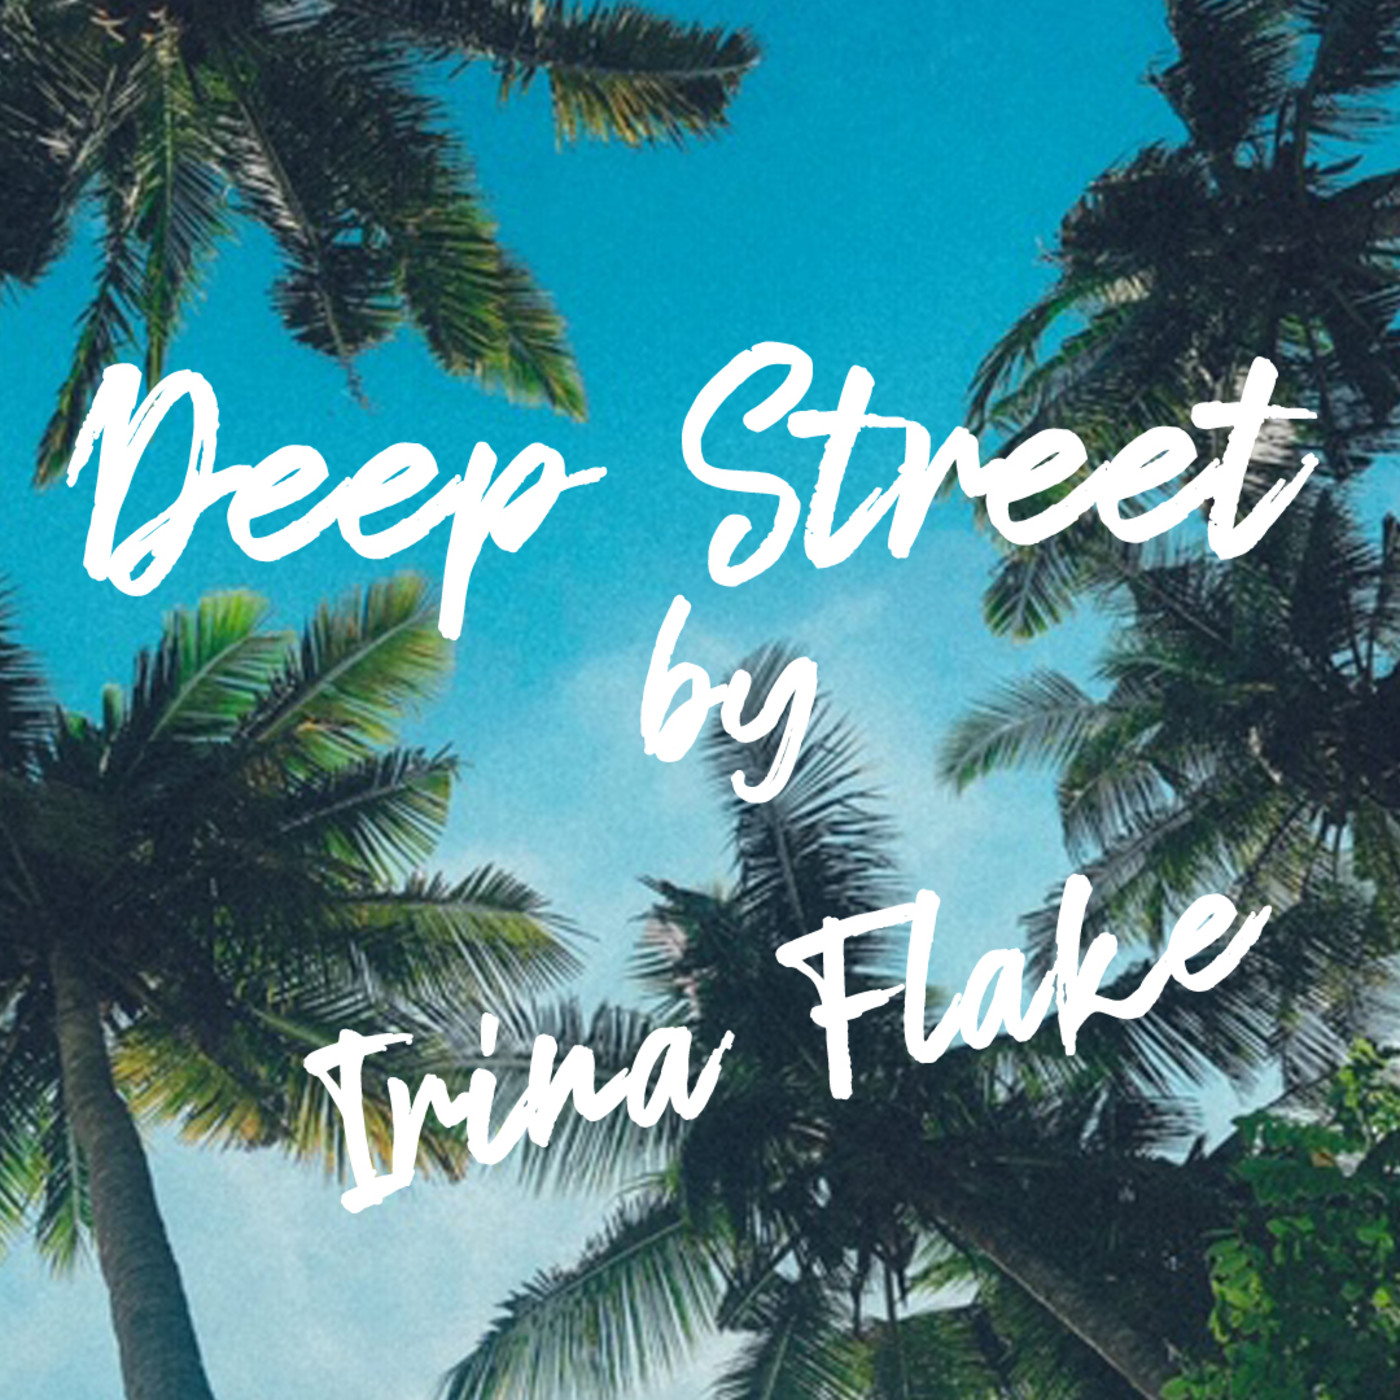 Deep Street by Irina Flake 12 @ Flaix FM 16.06.19